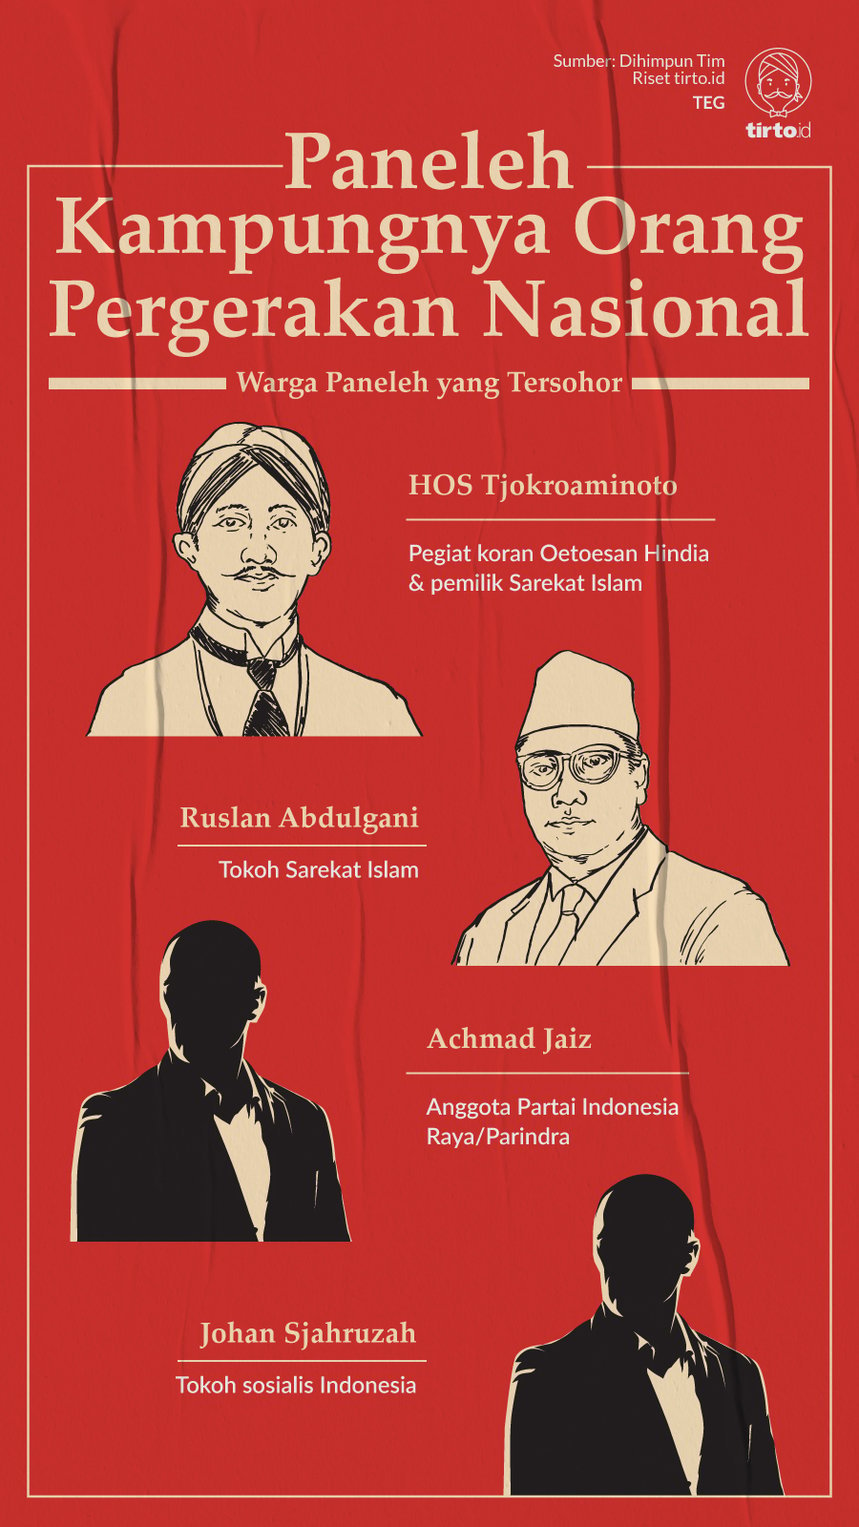 Infografik paneleh kampungnya orang pergerakan nasional